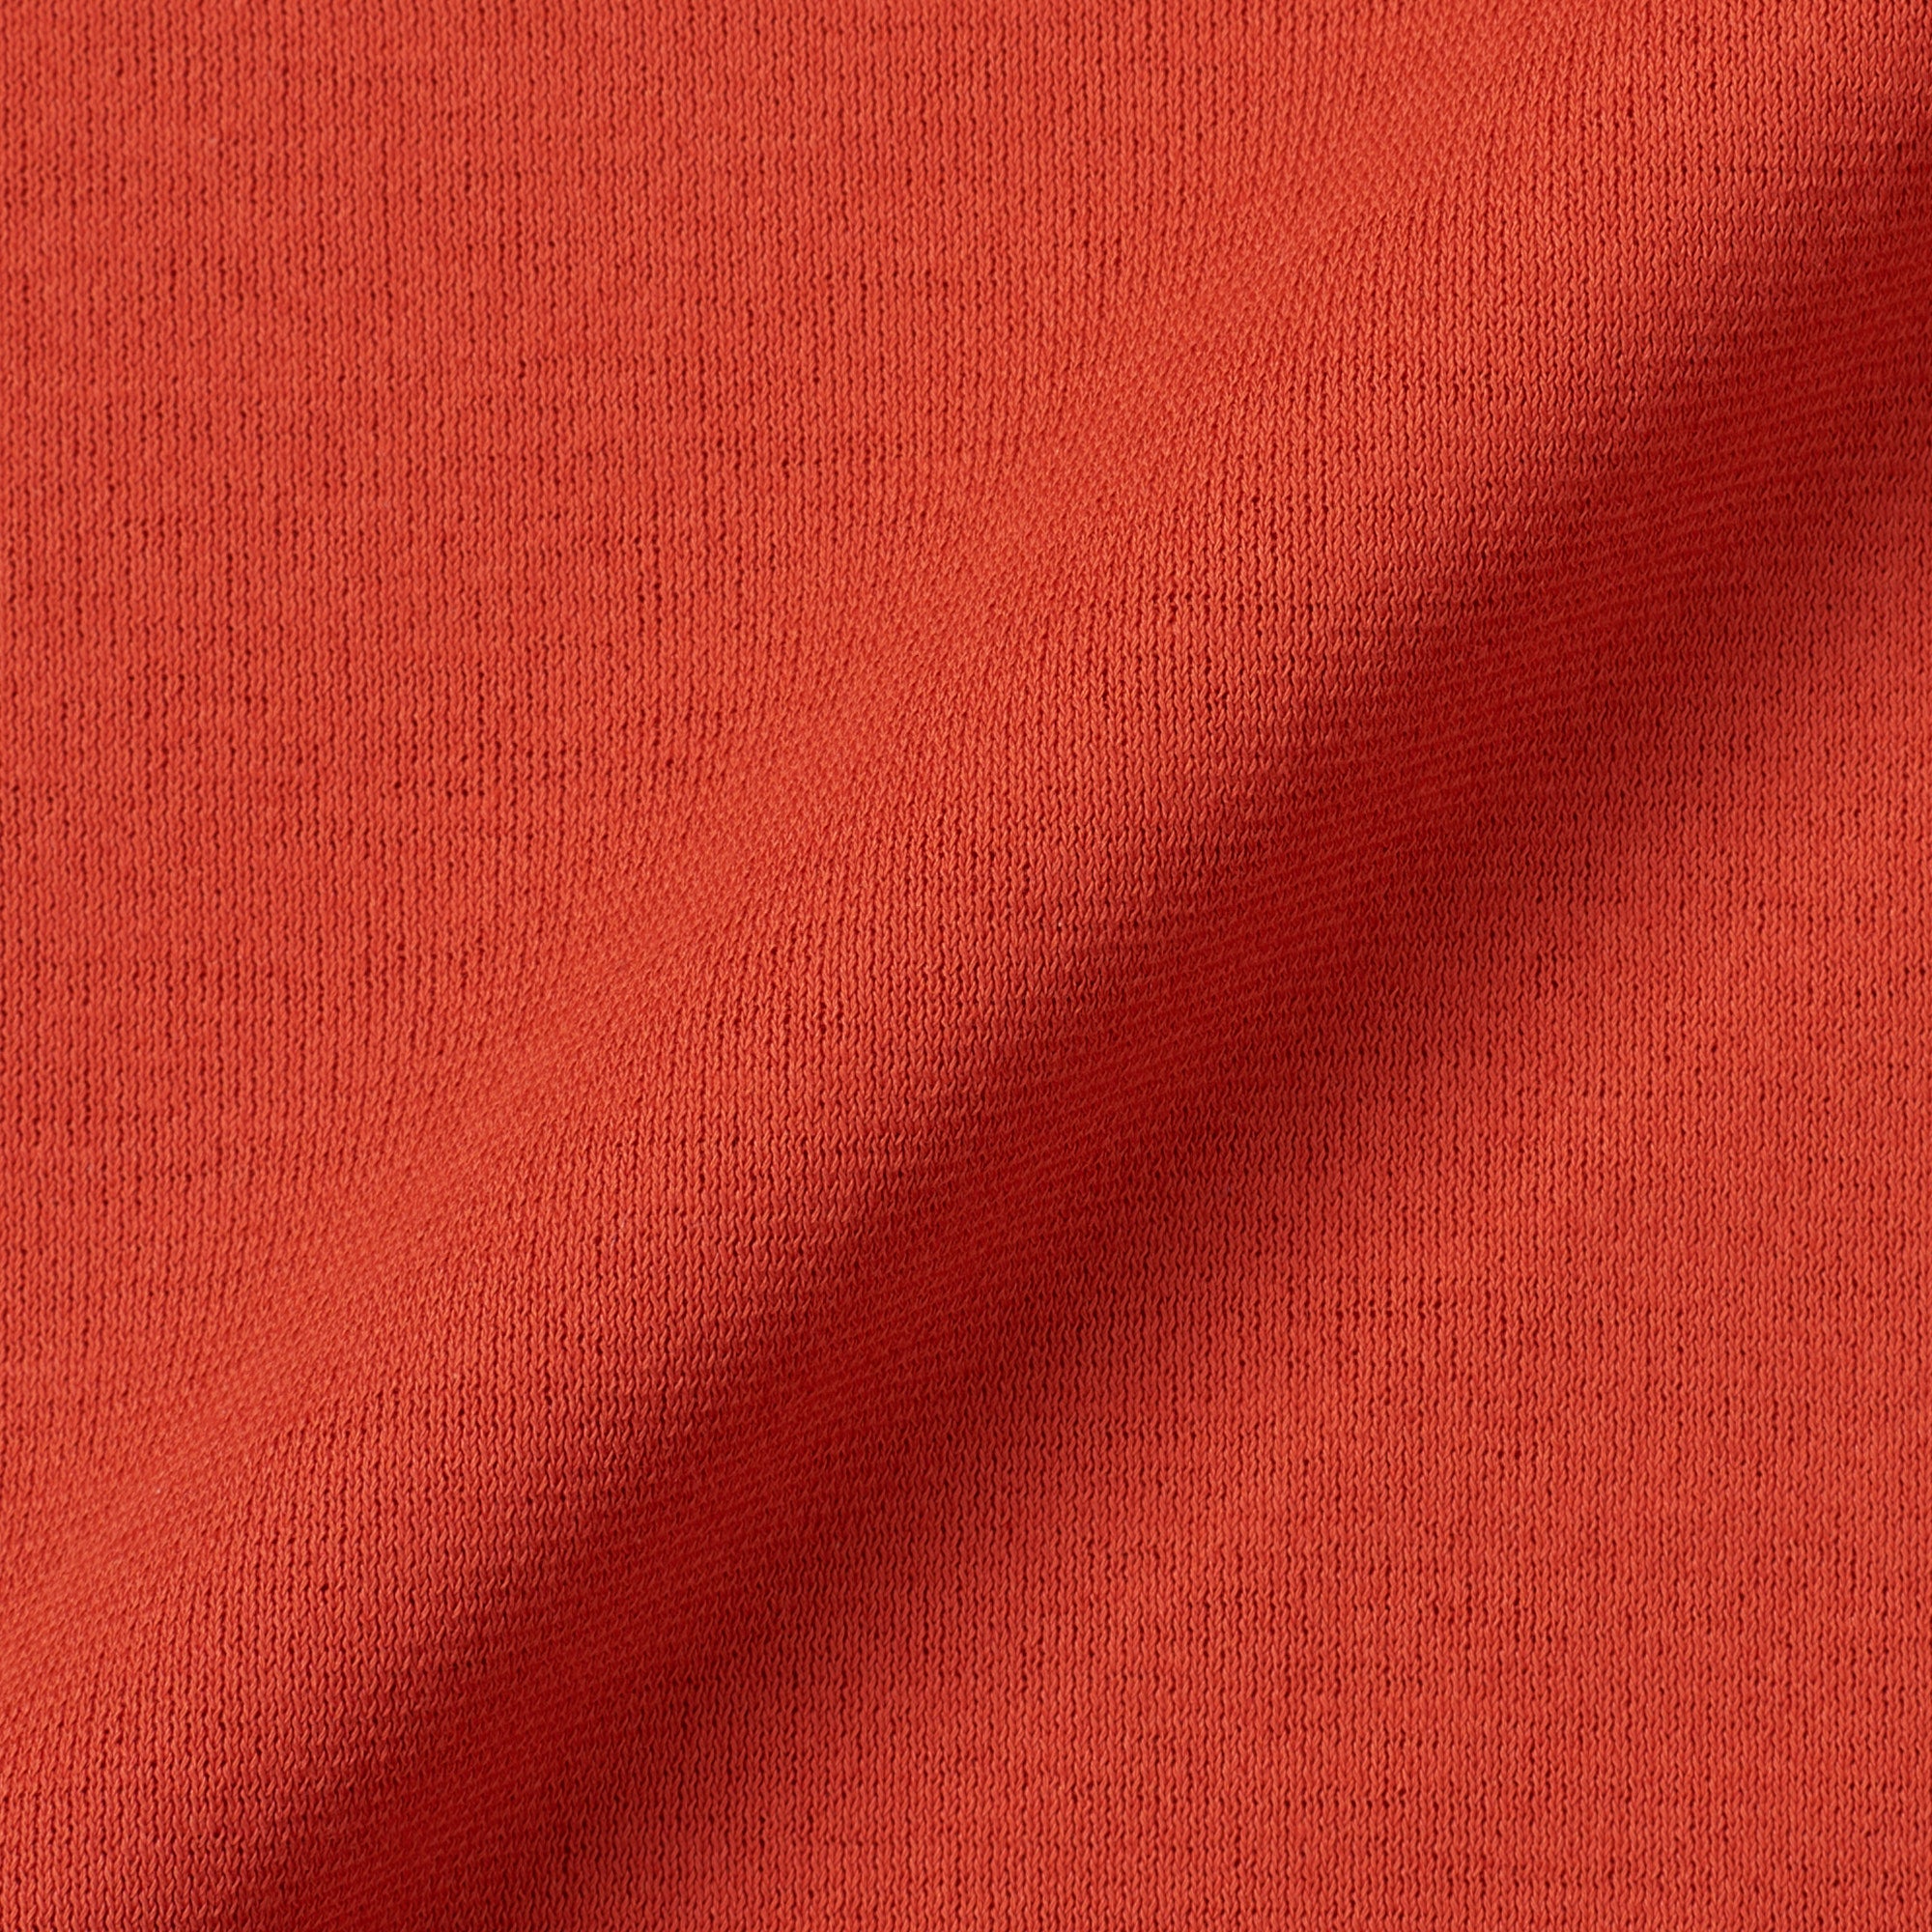 Kiton KIRED "Baciomc" Brick Red Exclusive Crepe Cotton Short Sleeve T-Shirt Slim 2023 KIRED